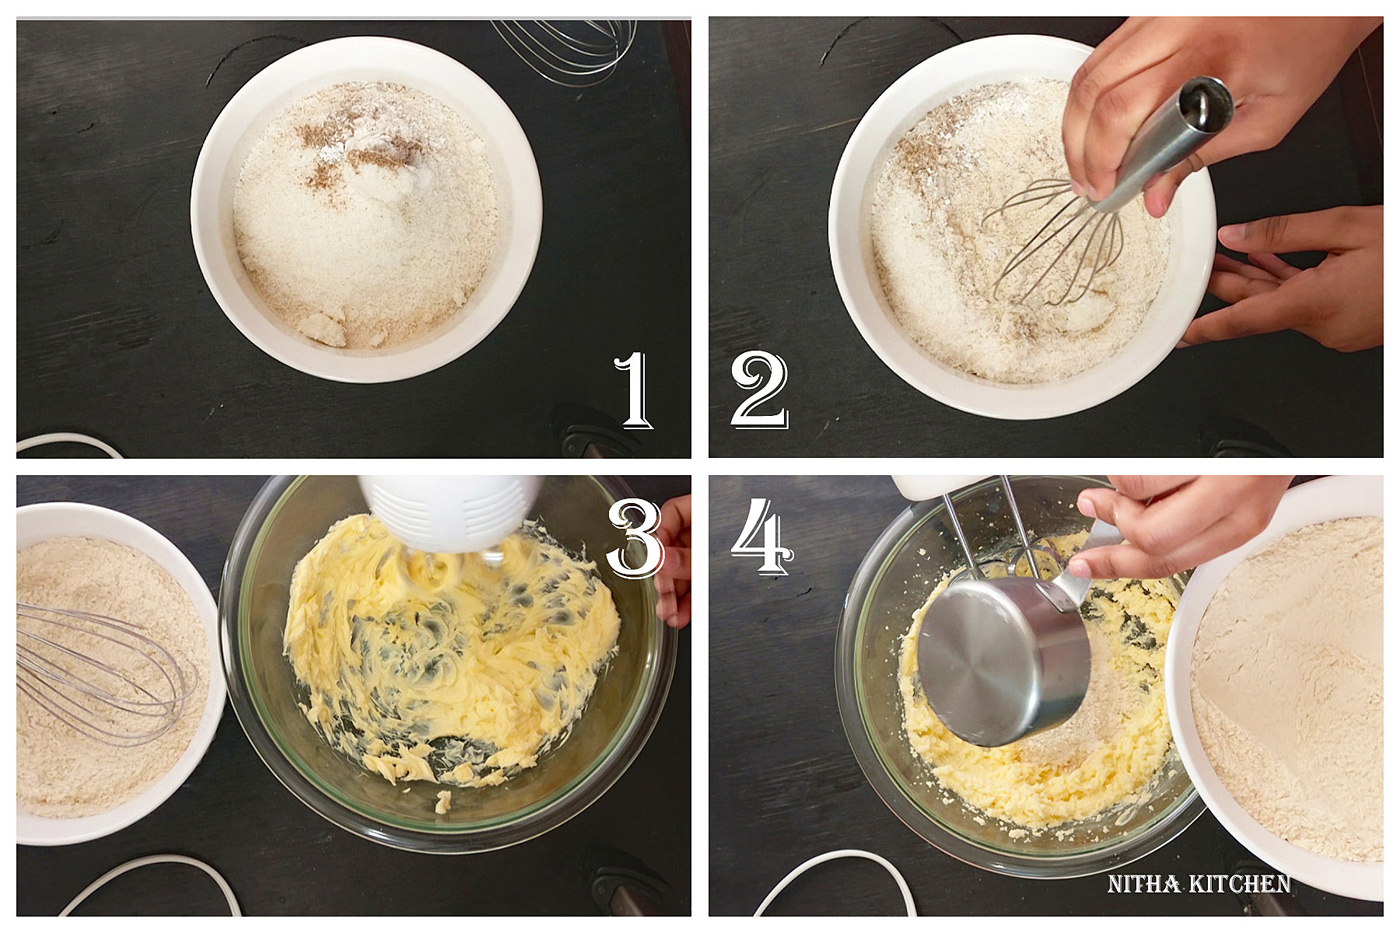 Nitha Kitchen Eggless Whole Wheat Coconut Cookies Recipe